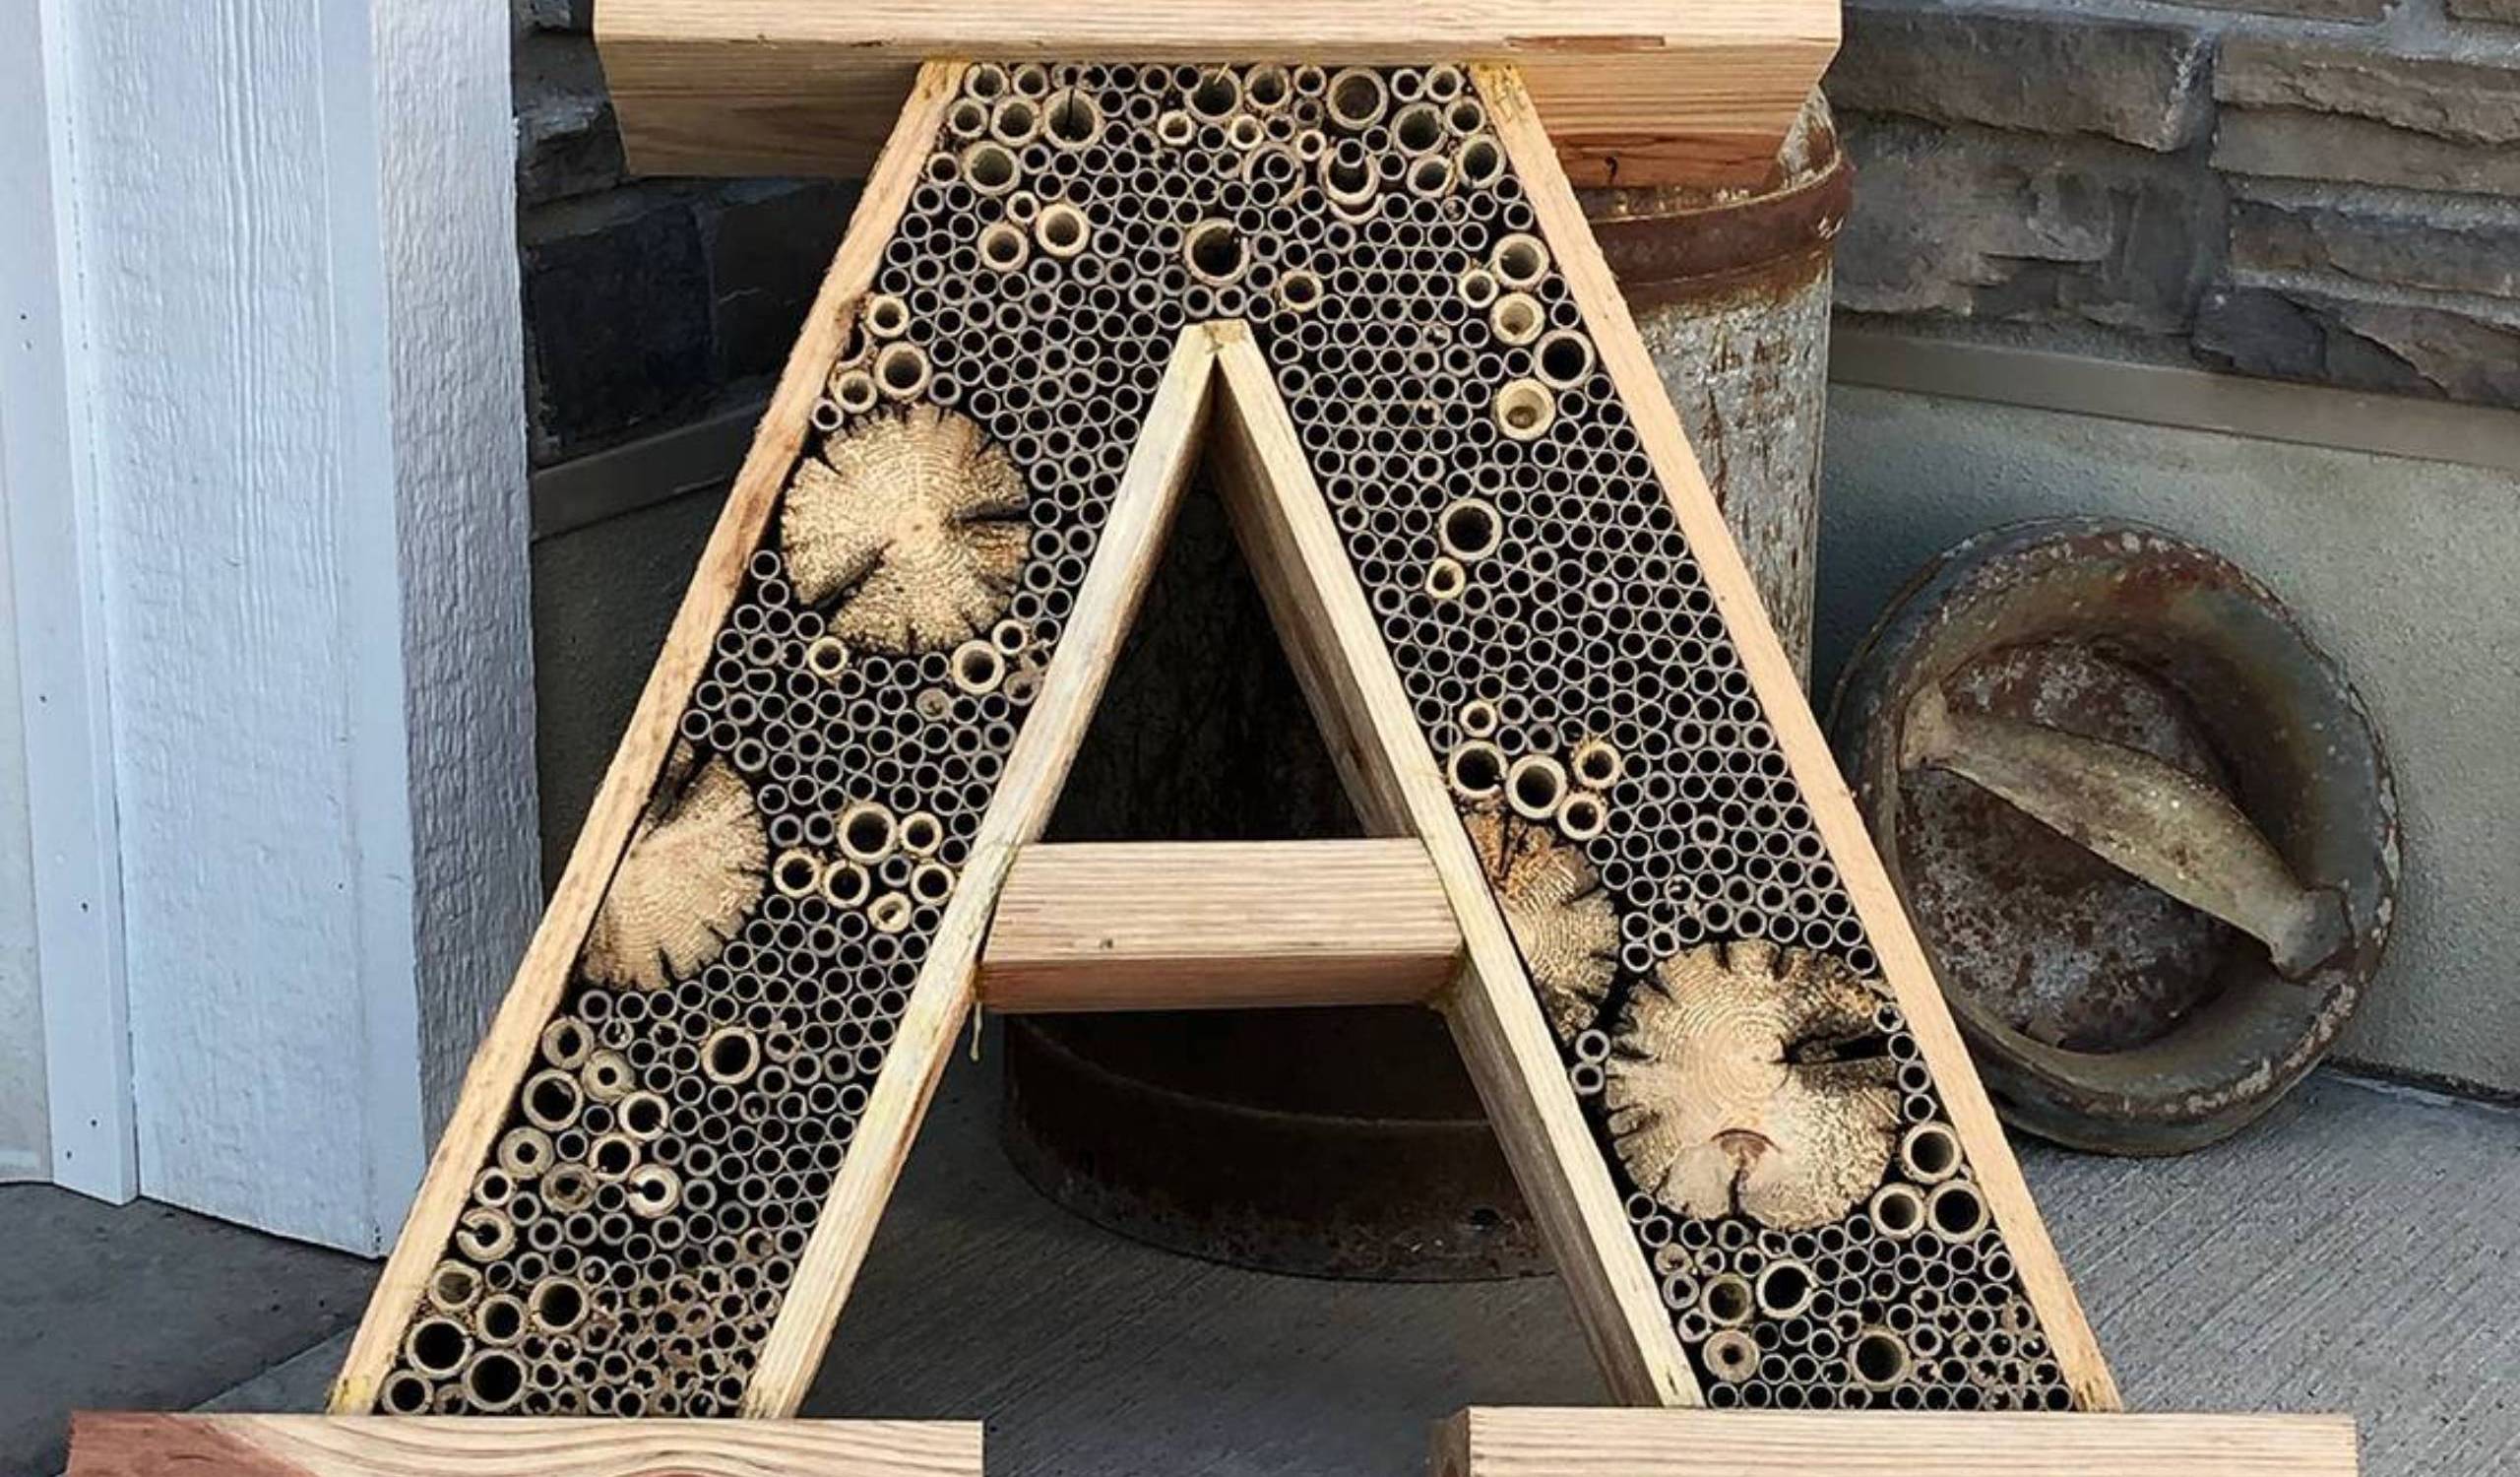 Aggie wild bee hotel 